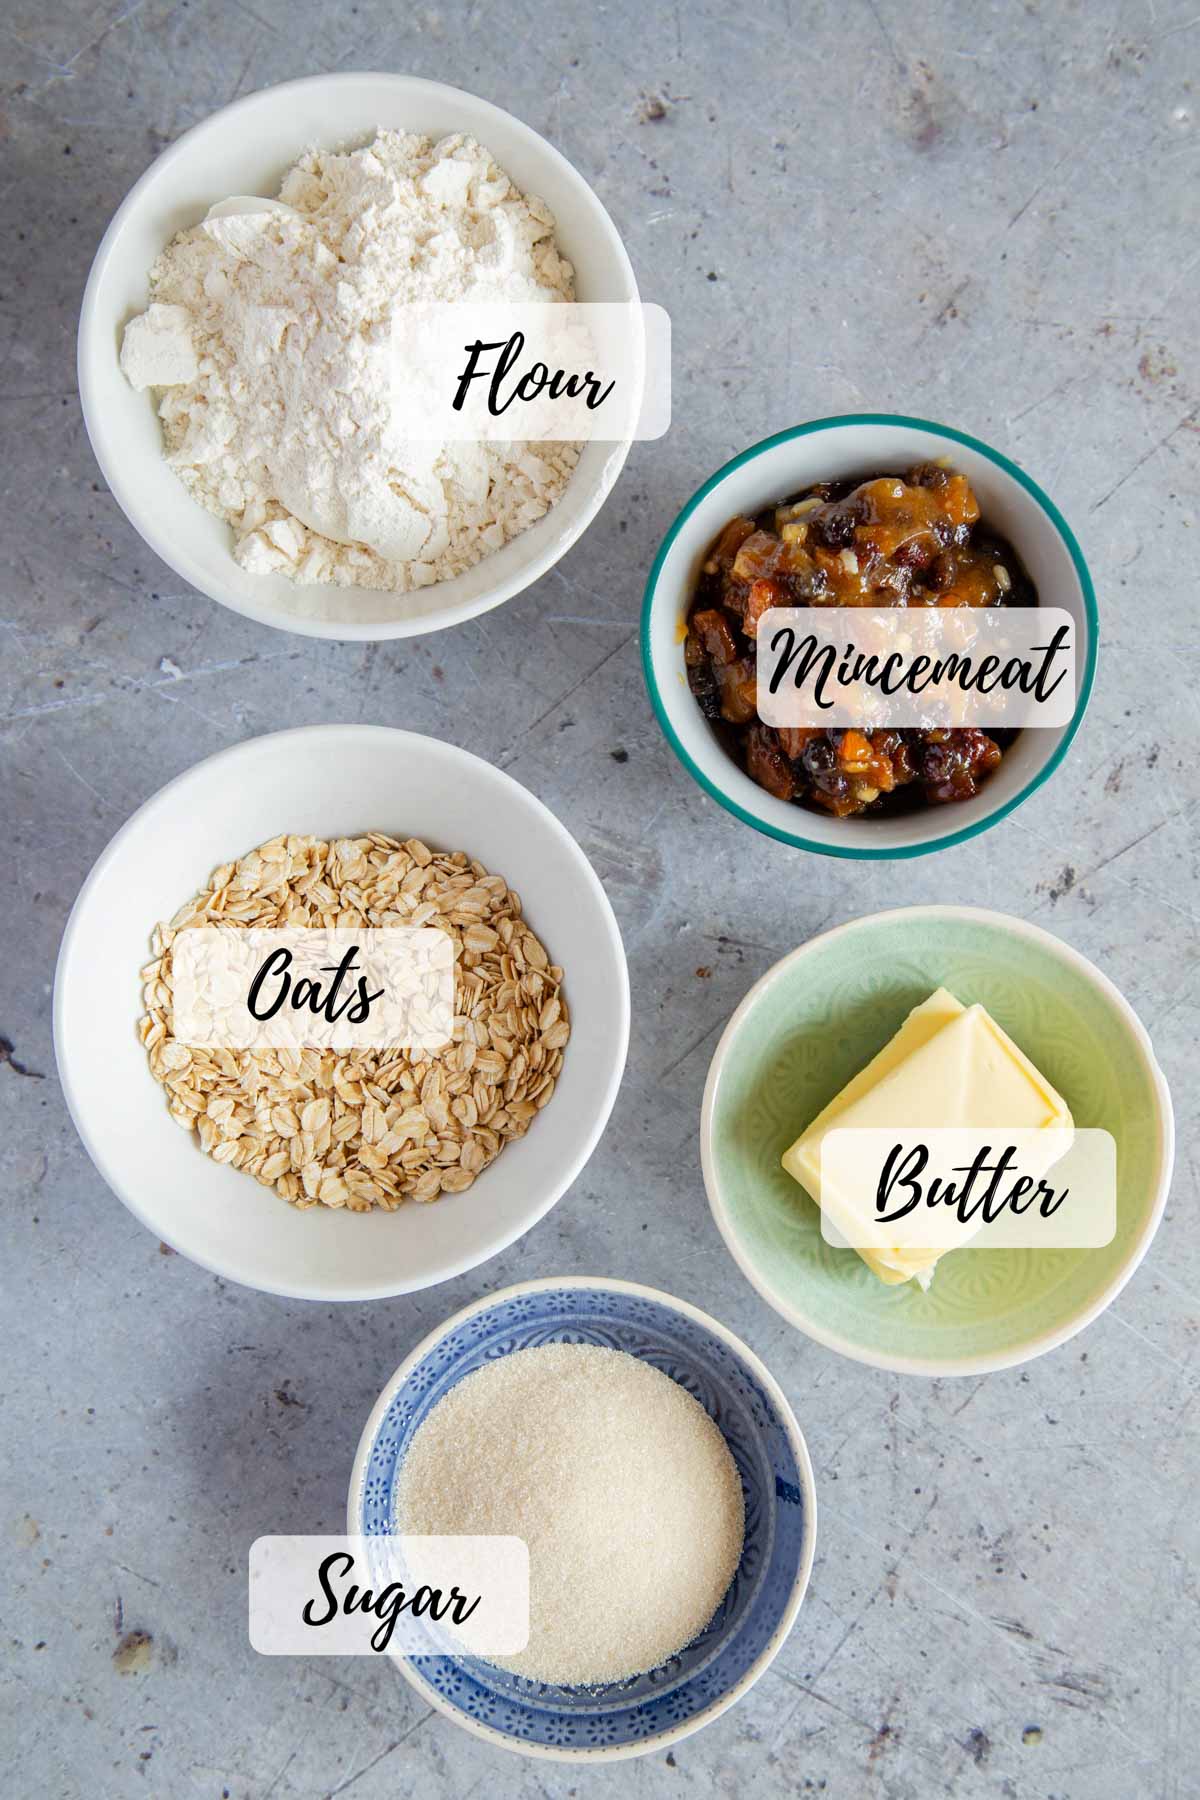 The ingredients: lour, mincemeat, butter, sugar, oats